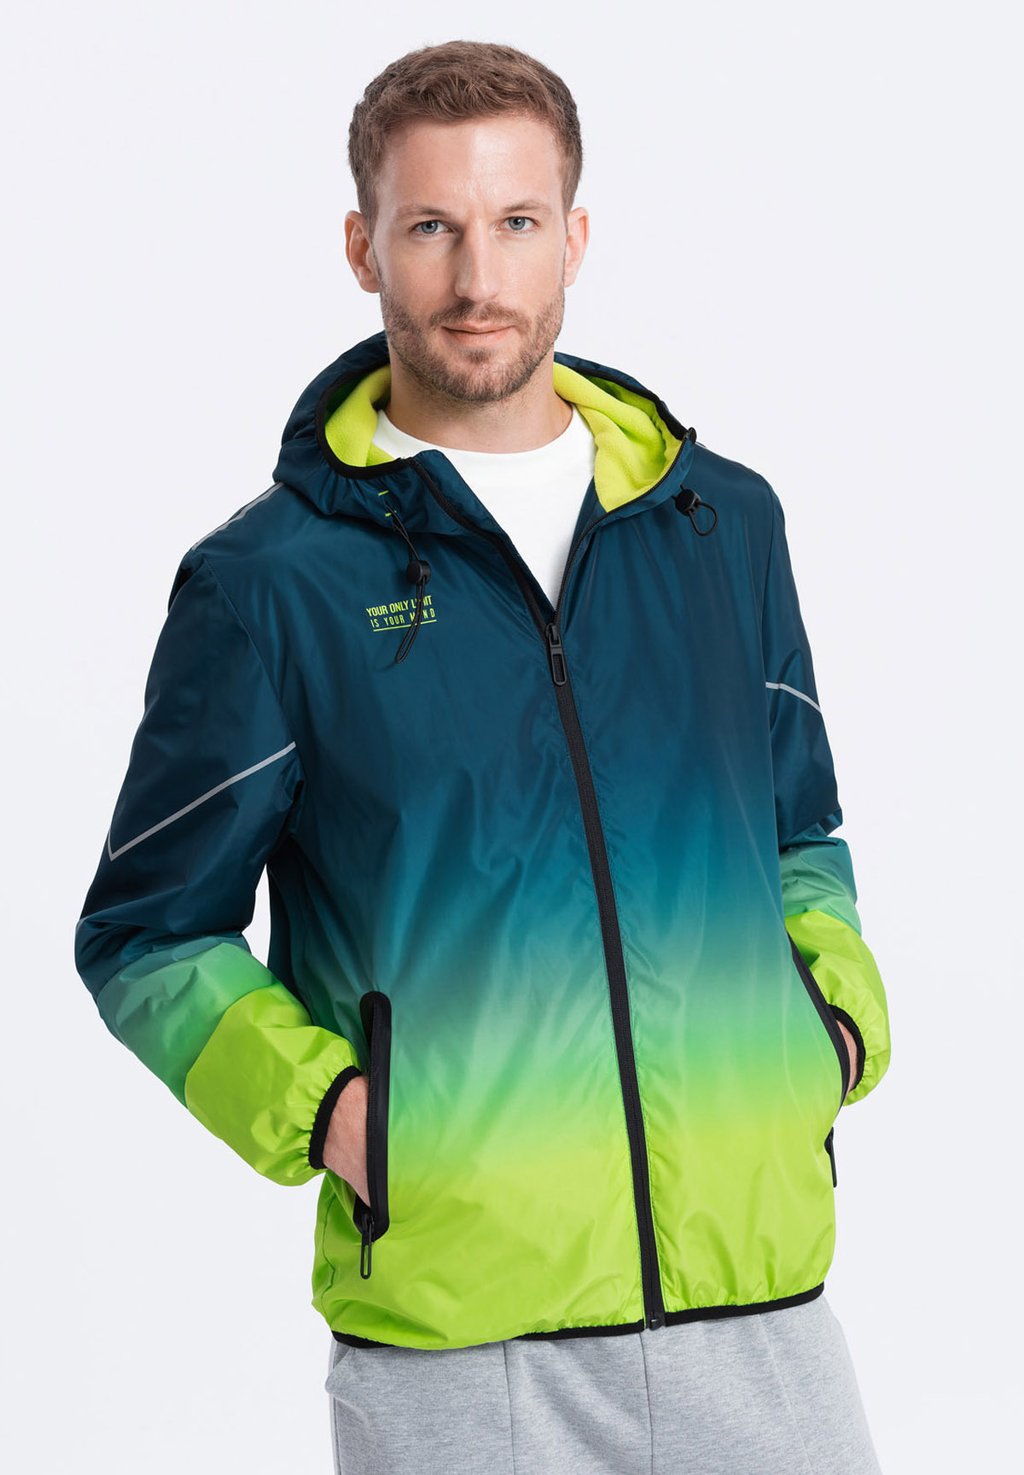 Куртка для отдыха на природе OM-JANP Ombre, цвет turquoise and lime green